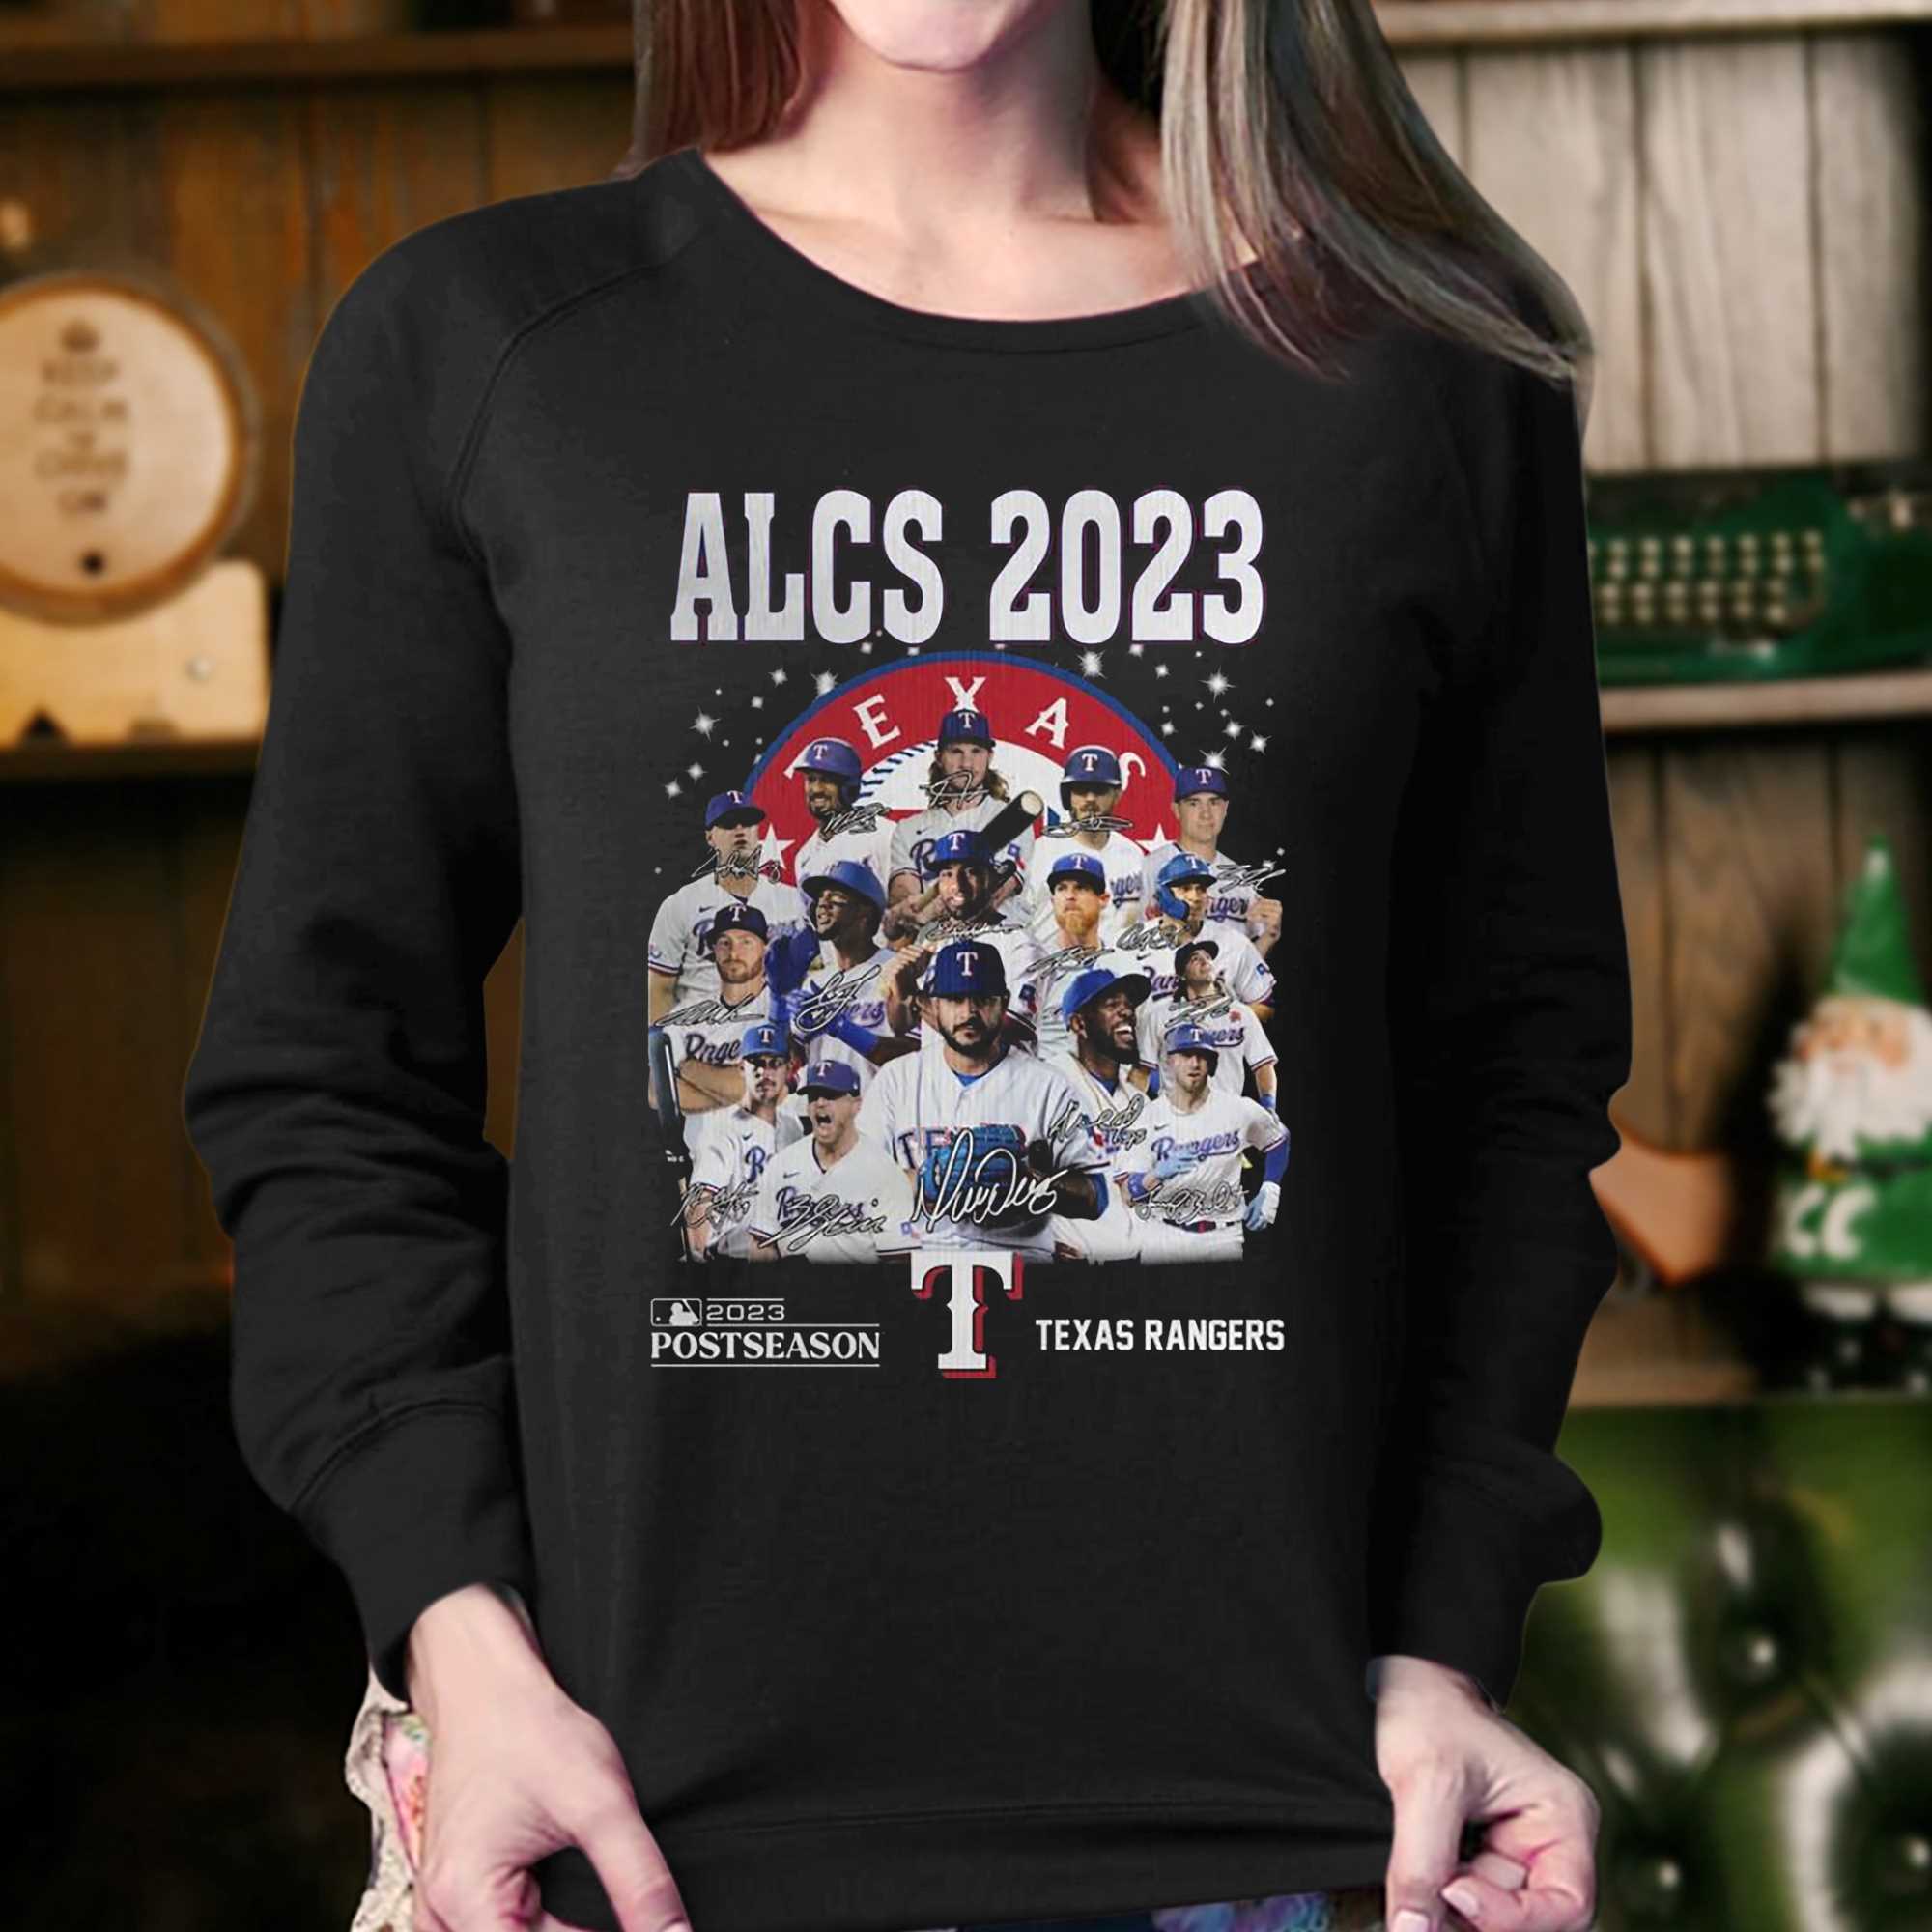 Texas Rangers ALCS Shirt